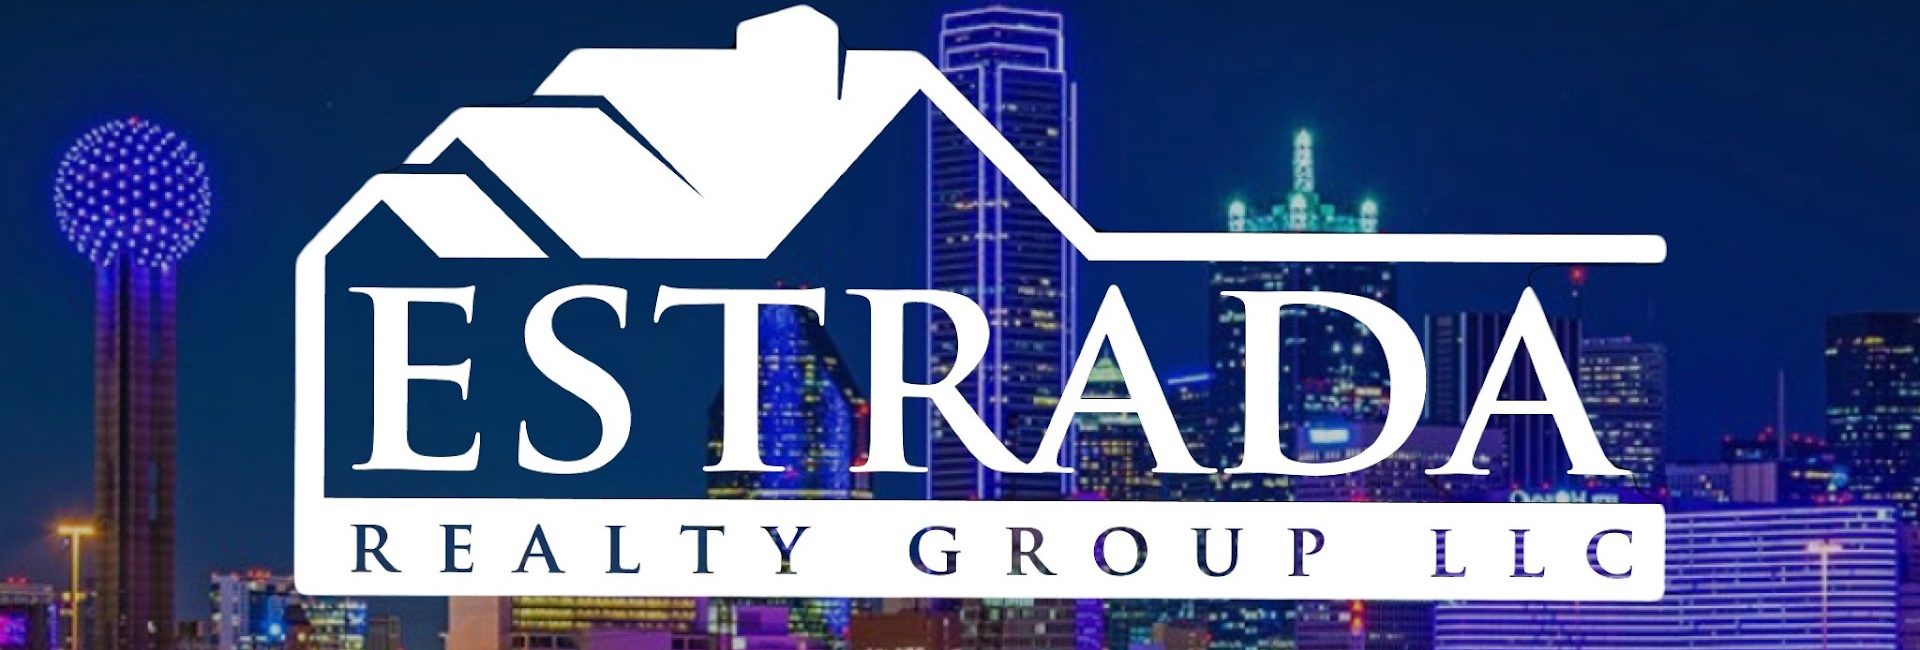 Estrada Realty Group LLC 6